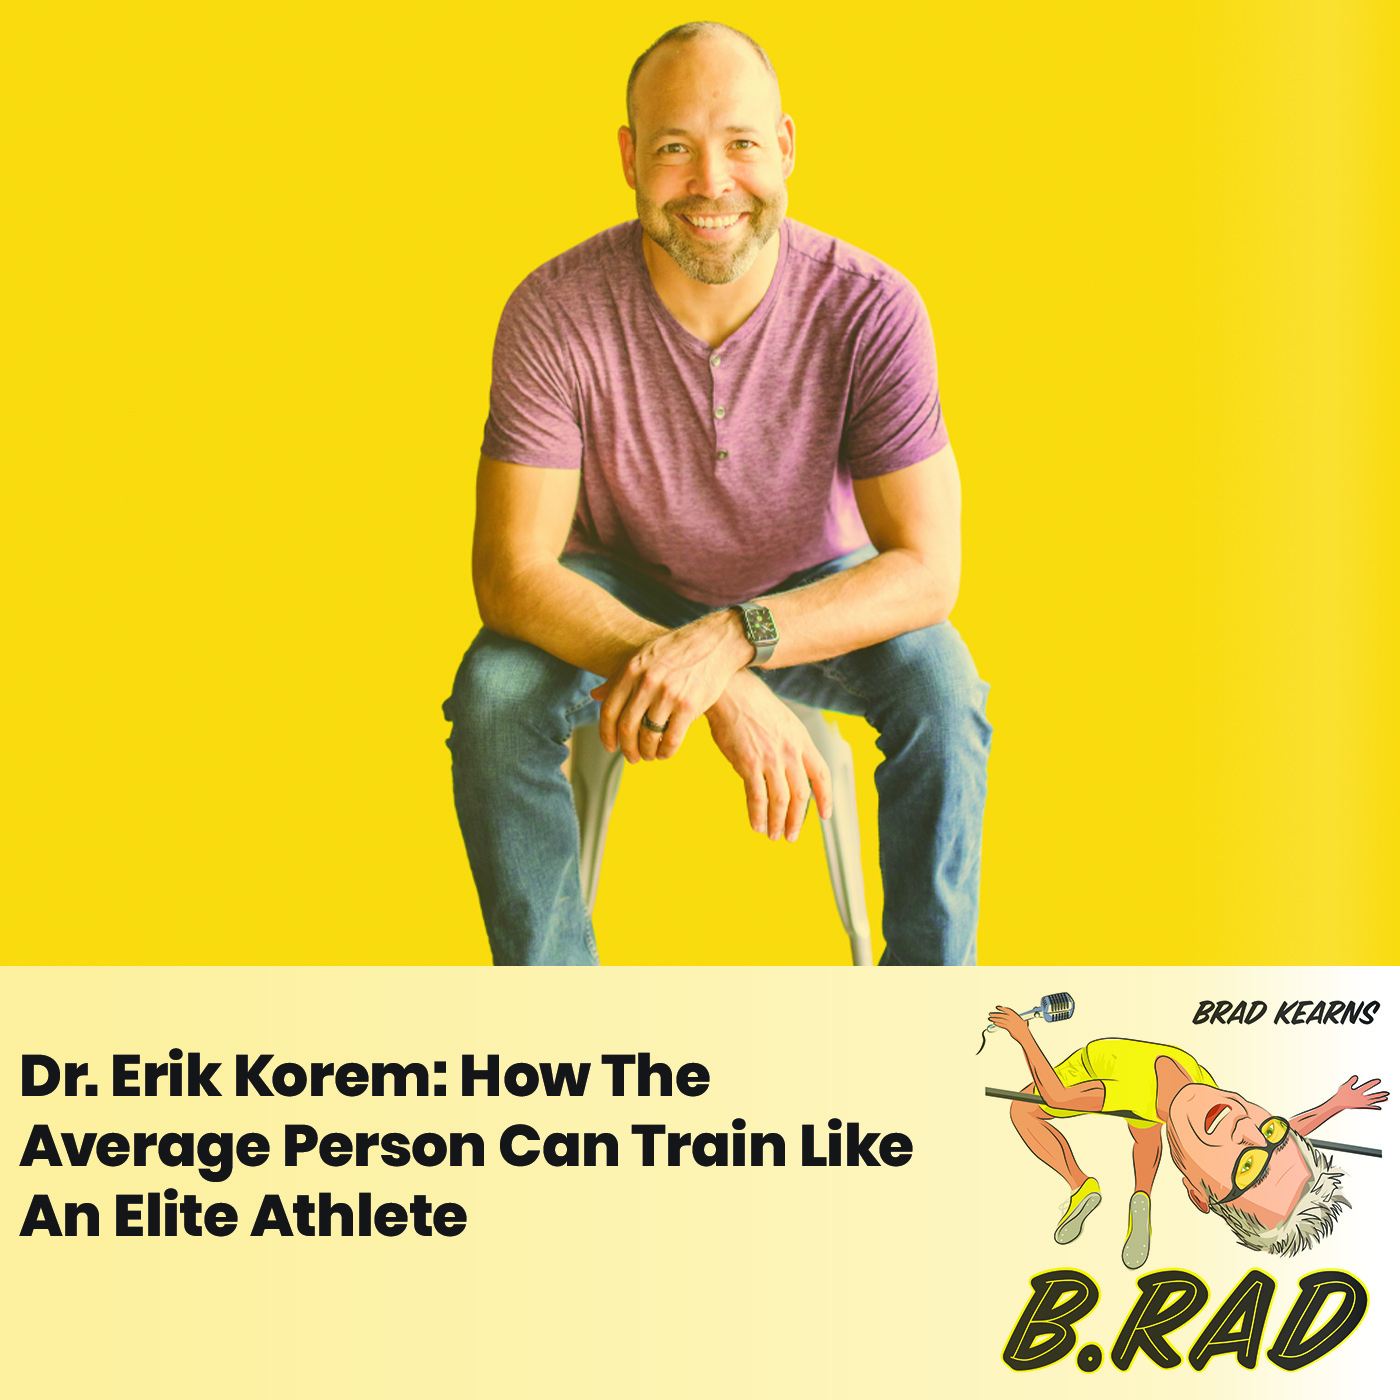 Dr. Erik Korem: How The Average Person Can Train Like An Elite Athlete